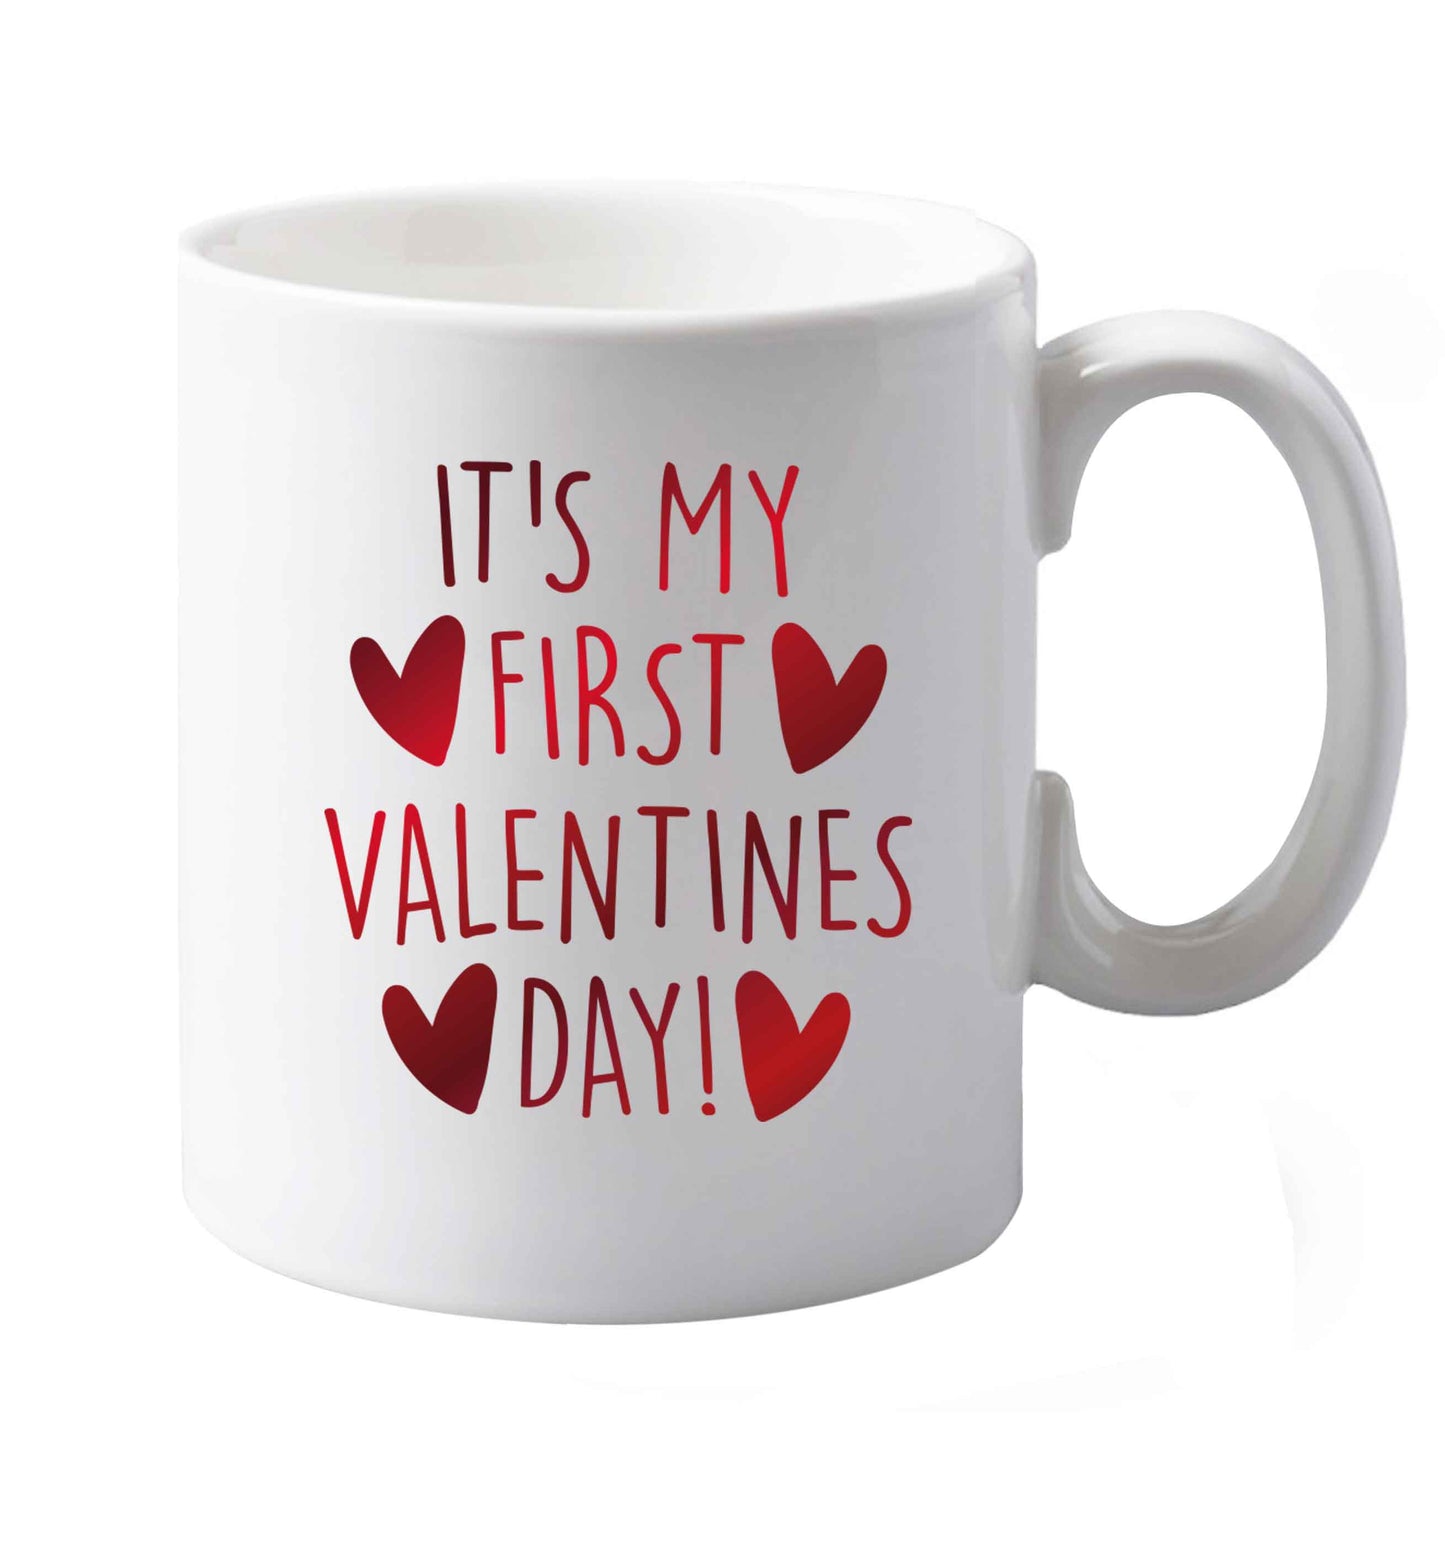 10 oz It's my first valentines day! ceramic mug both sides